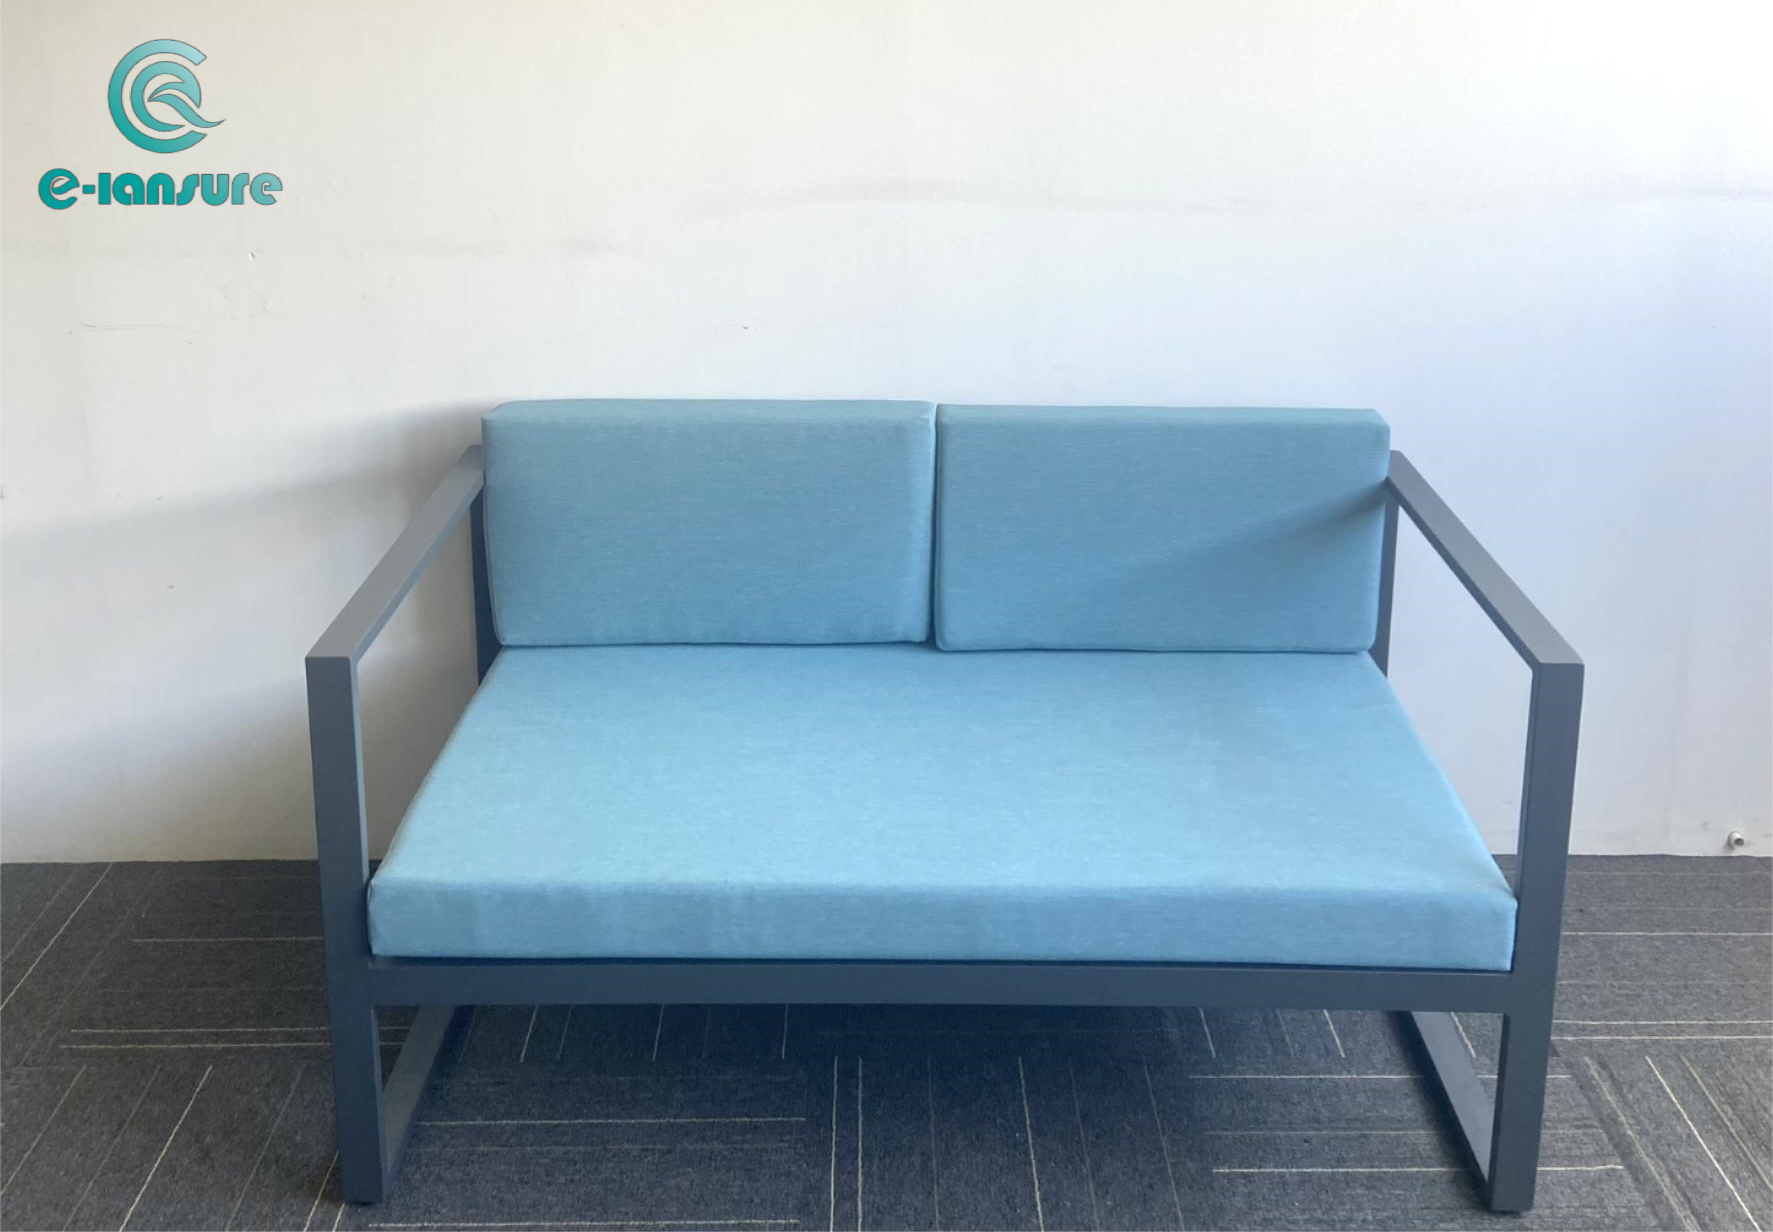 Customized outdoor furniture aluminum frame love set sofa with cusion